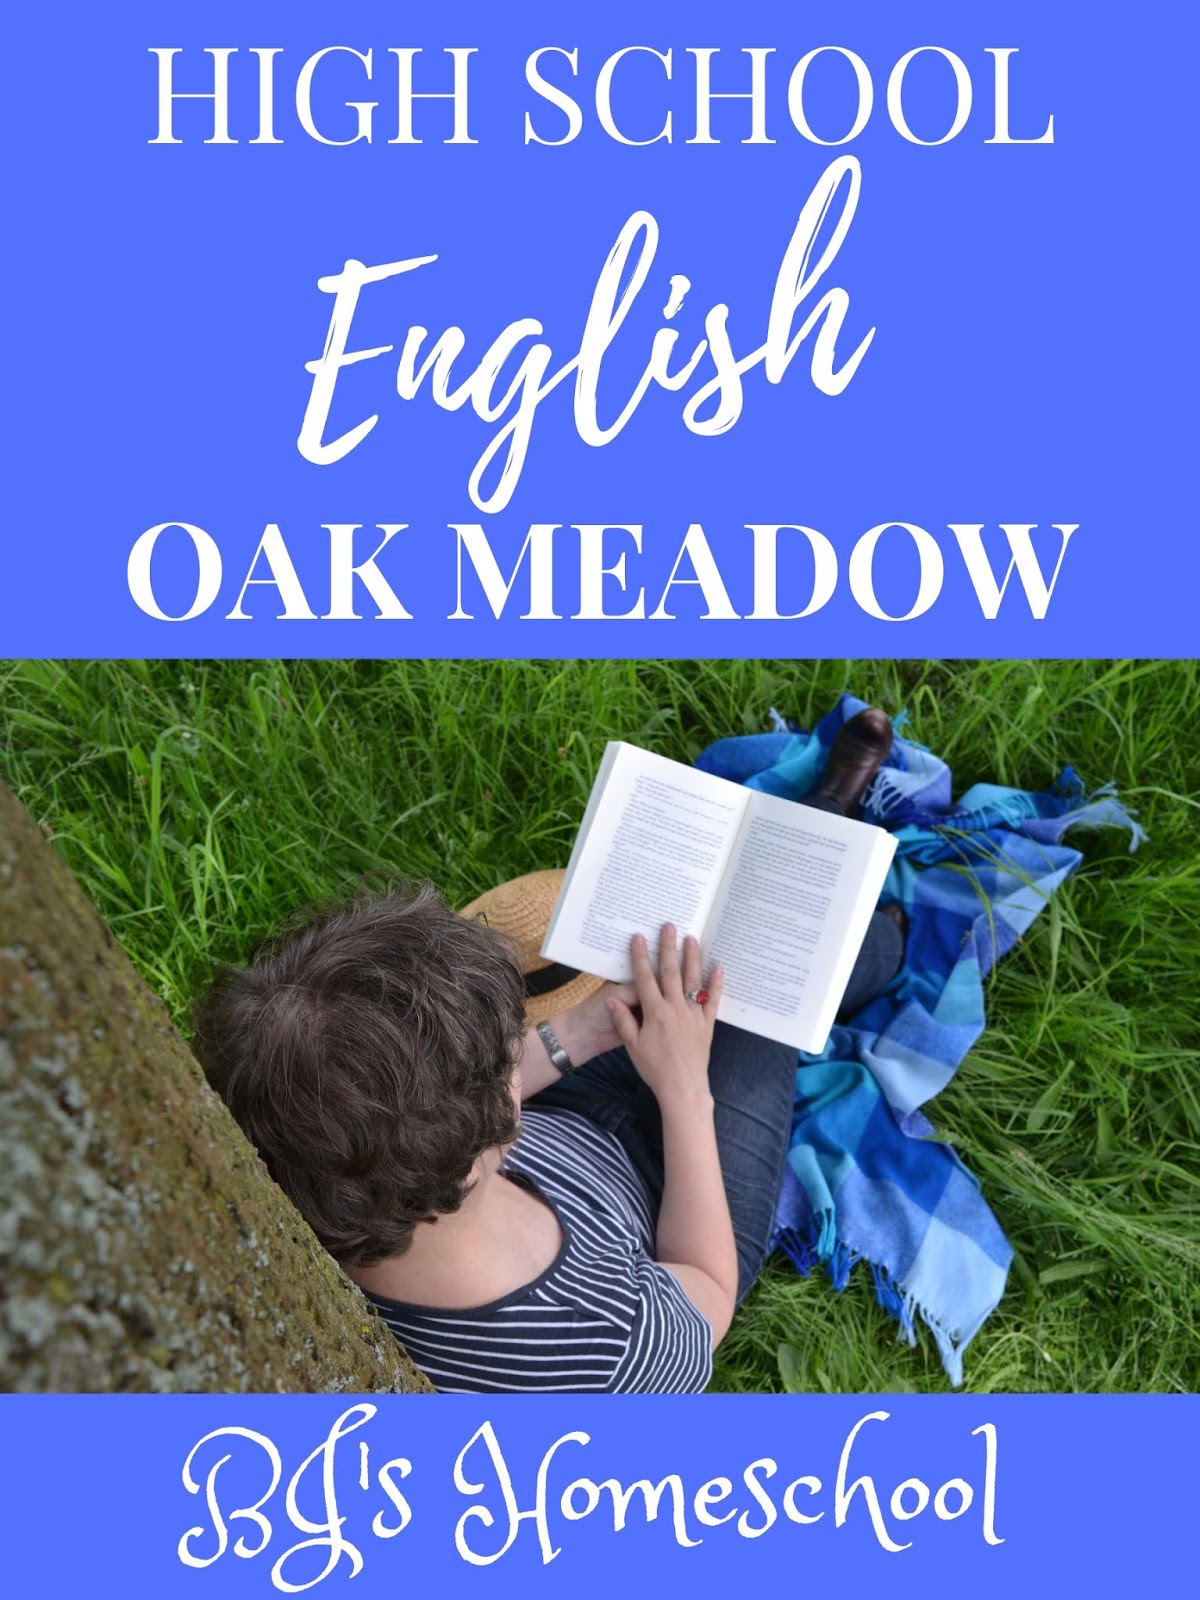 BJ s Homeschool Homeschool High School English Oak Meadow Review